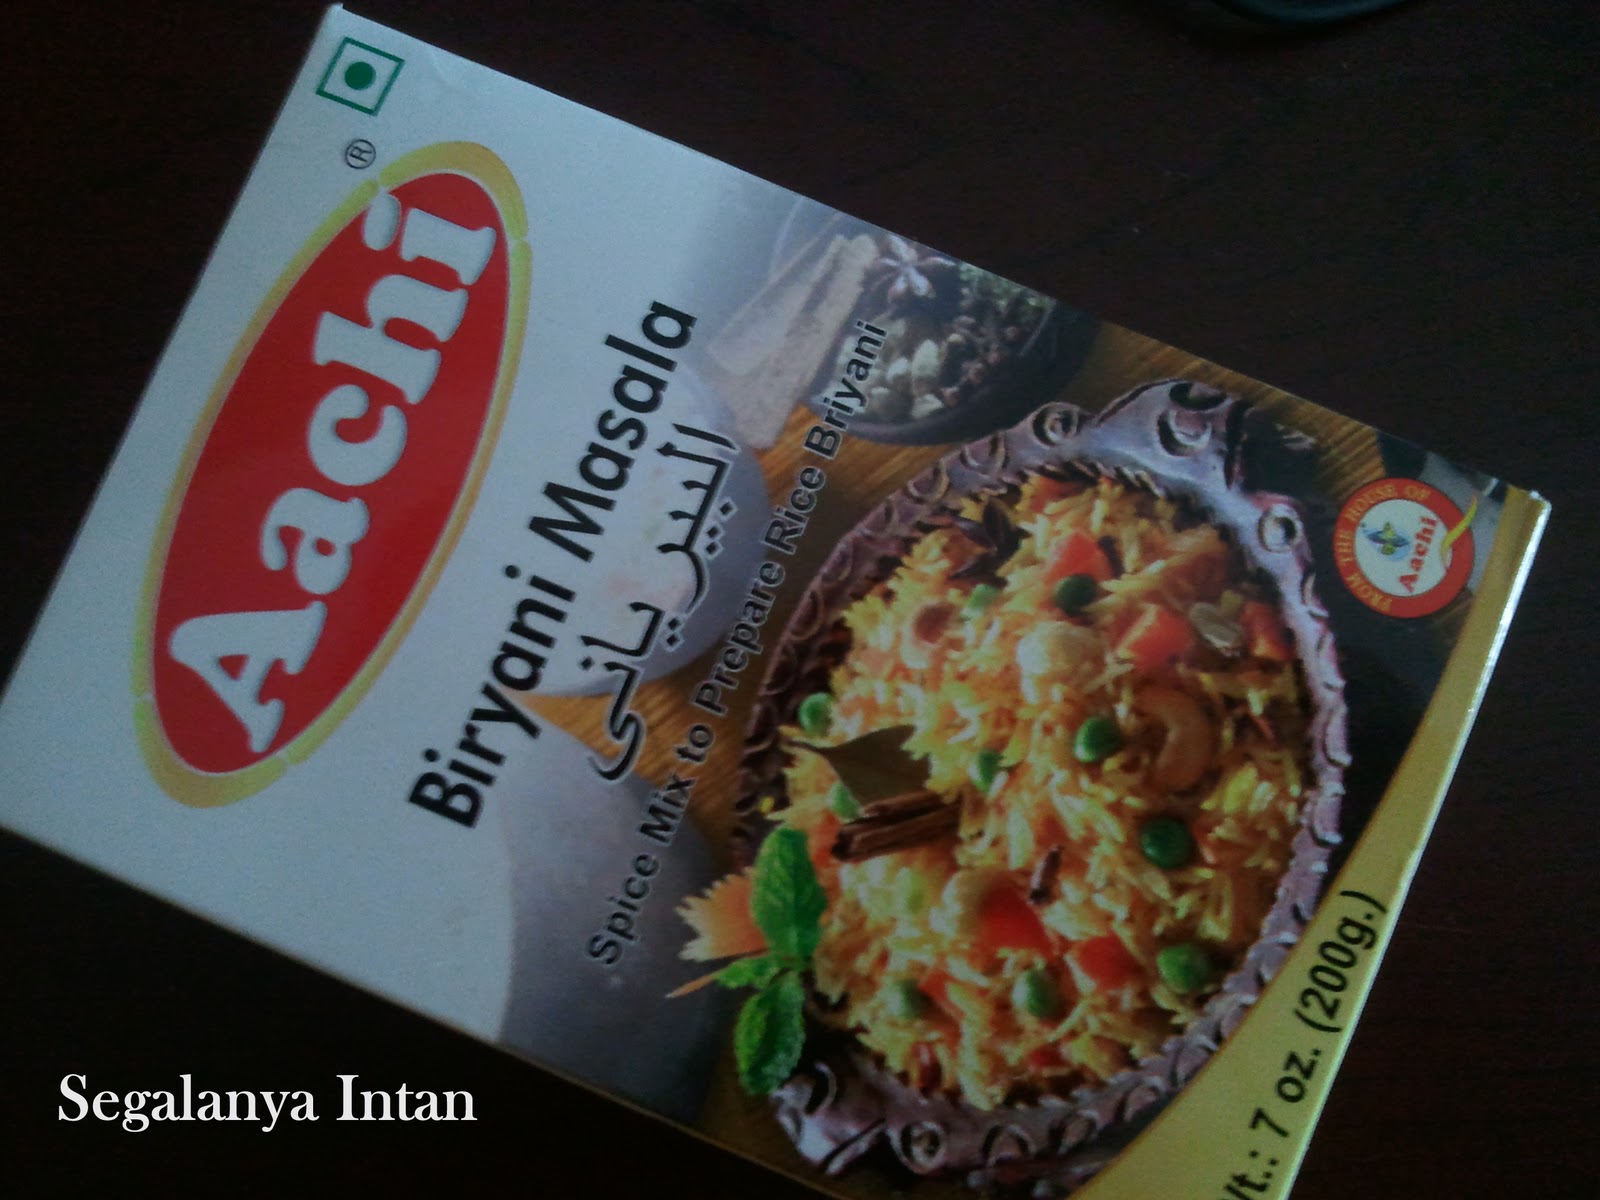 Segalanya Intan: Mutton Biryani Masala & Tandoori Chicken 